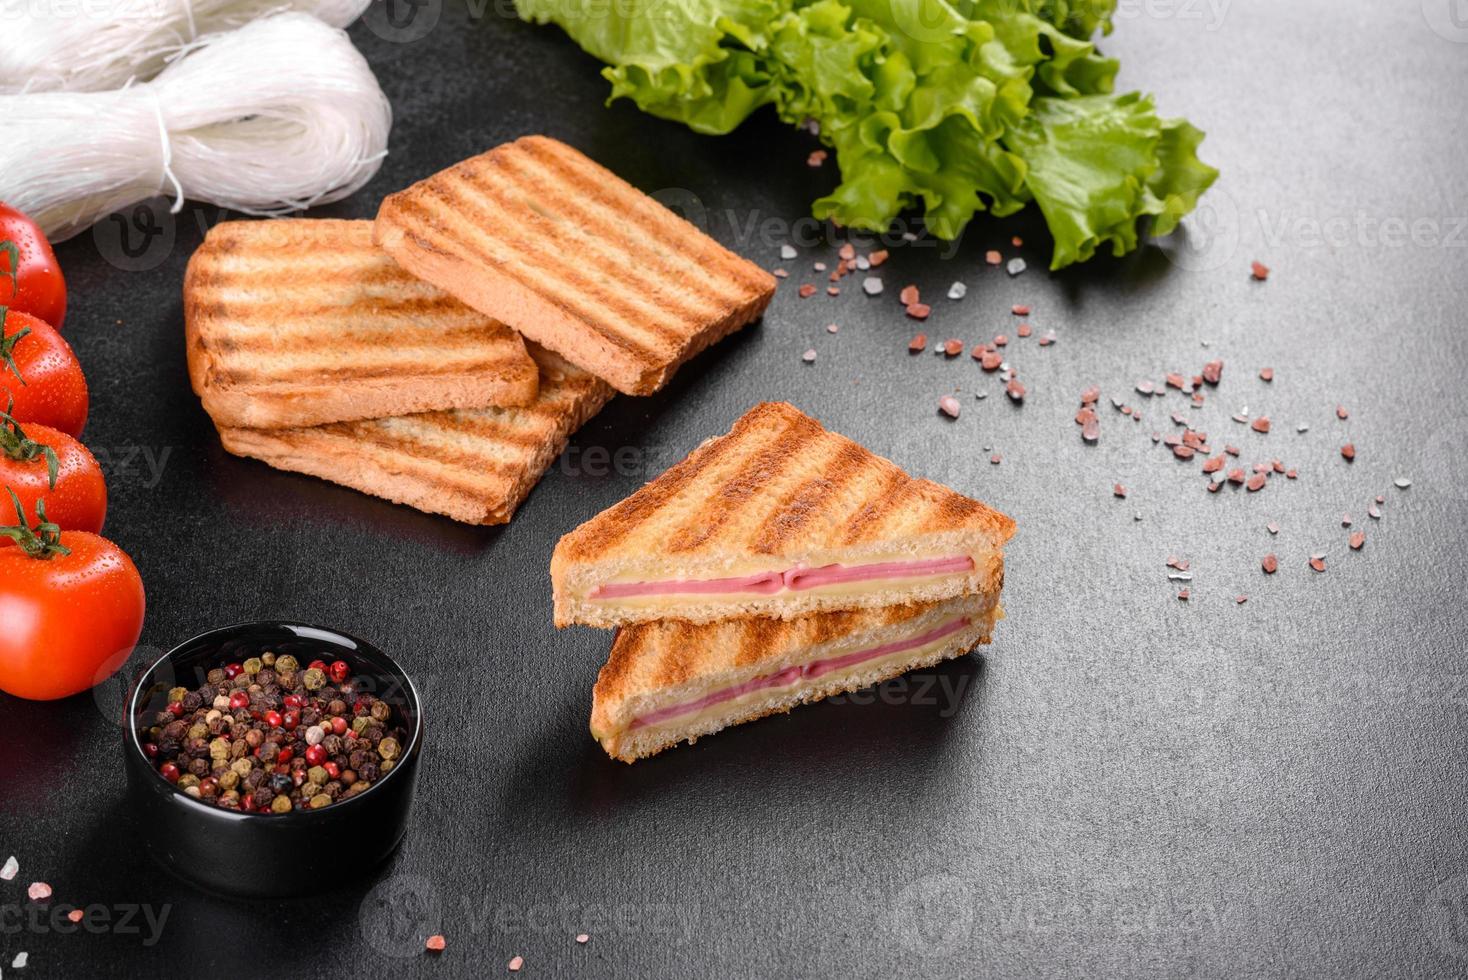 sándwich de jamón, queso, tomate, lechuga y pan tostado foto